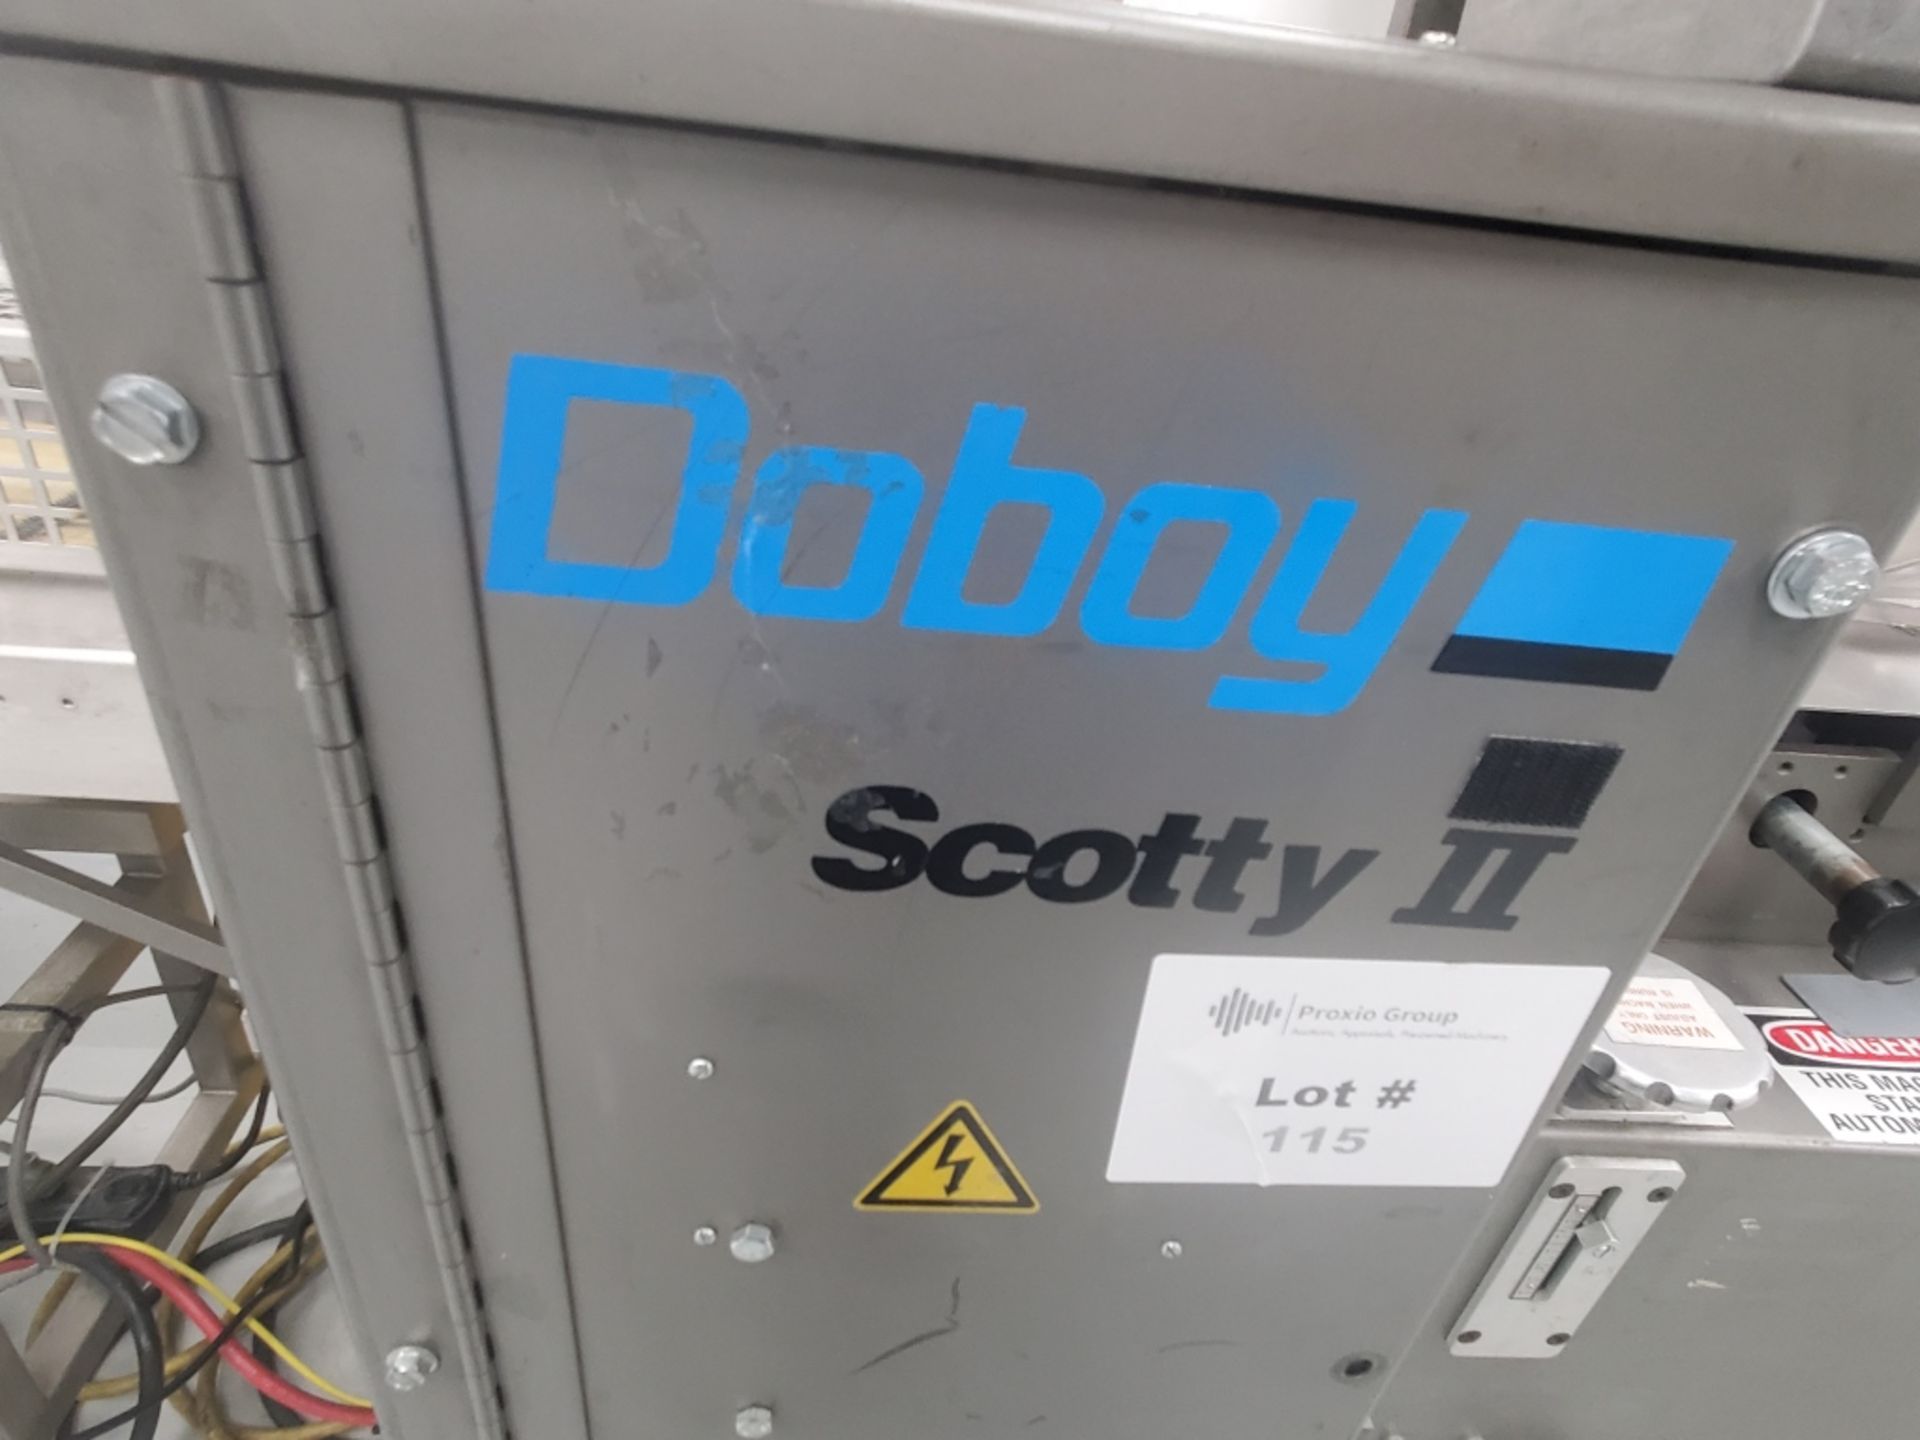 Doboy Model Scotty II Wrapper Over Wrapper 96-18990, 208V, 1ph, 60Hz - Image 9 of 9